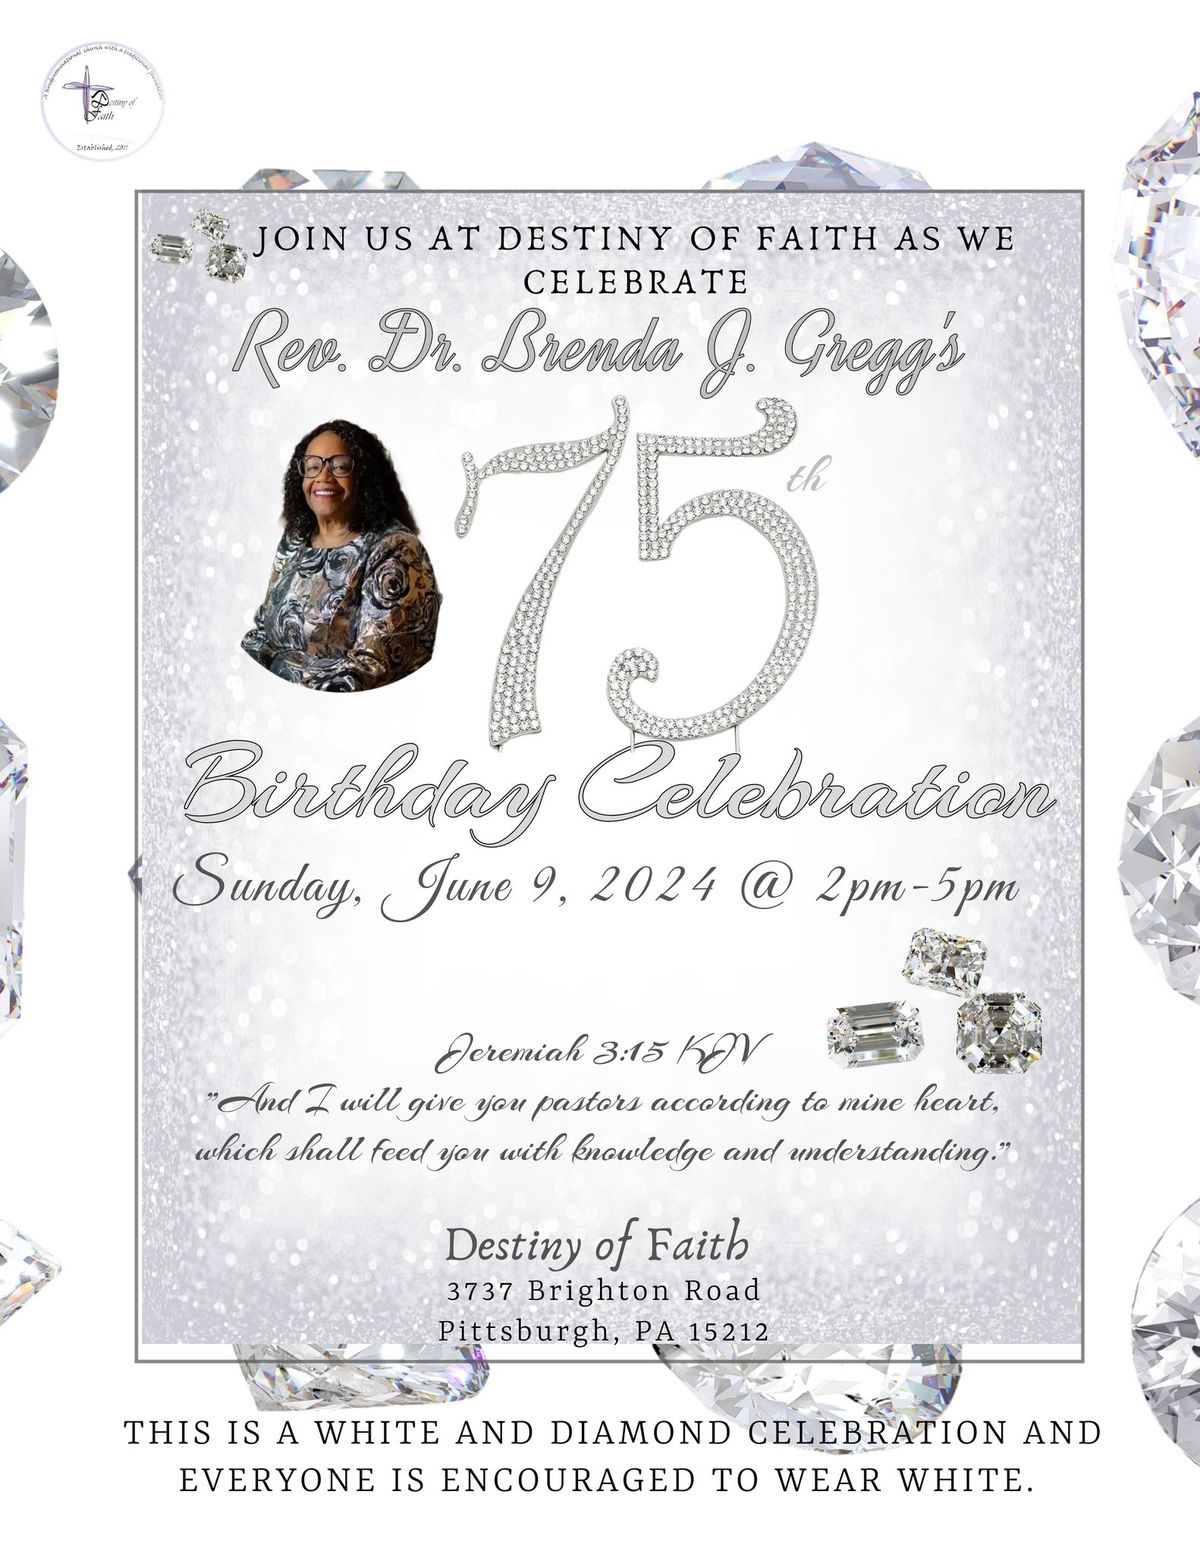 Our Angel of Destiny of Faith Rev. Dr. Brenda J. Gregg's 75th Diamond and White party